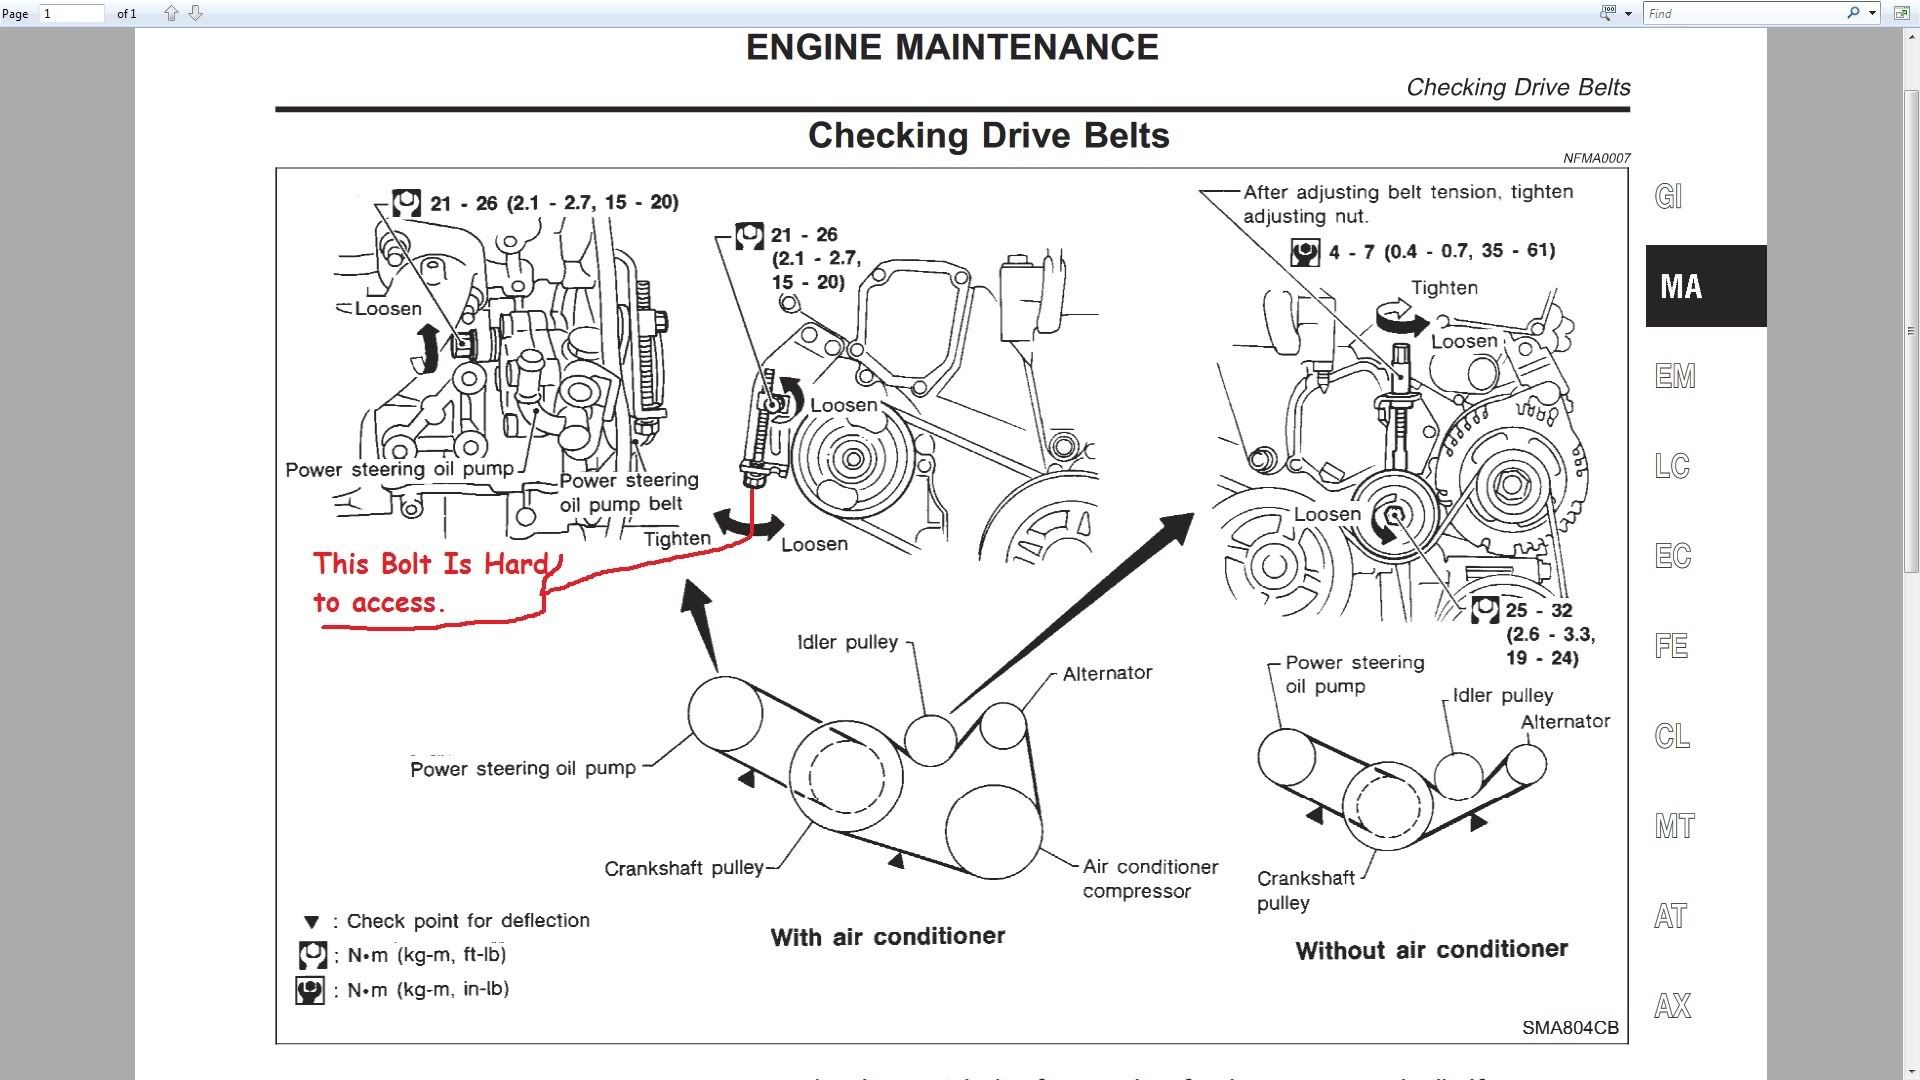 2000 Nissan maxima power steering belt replacement #2